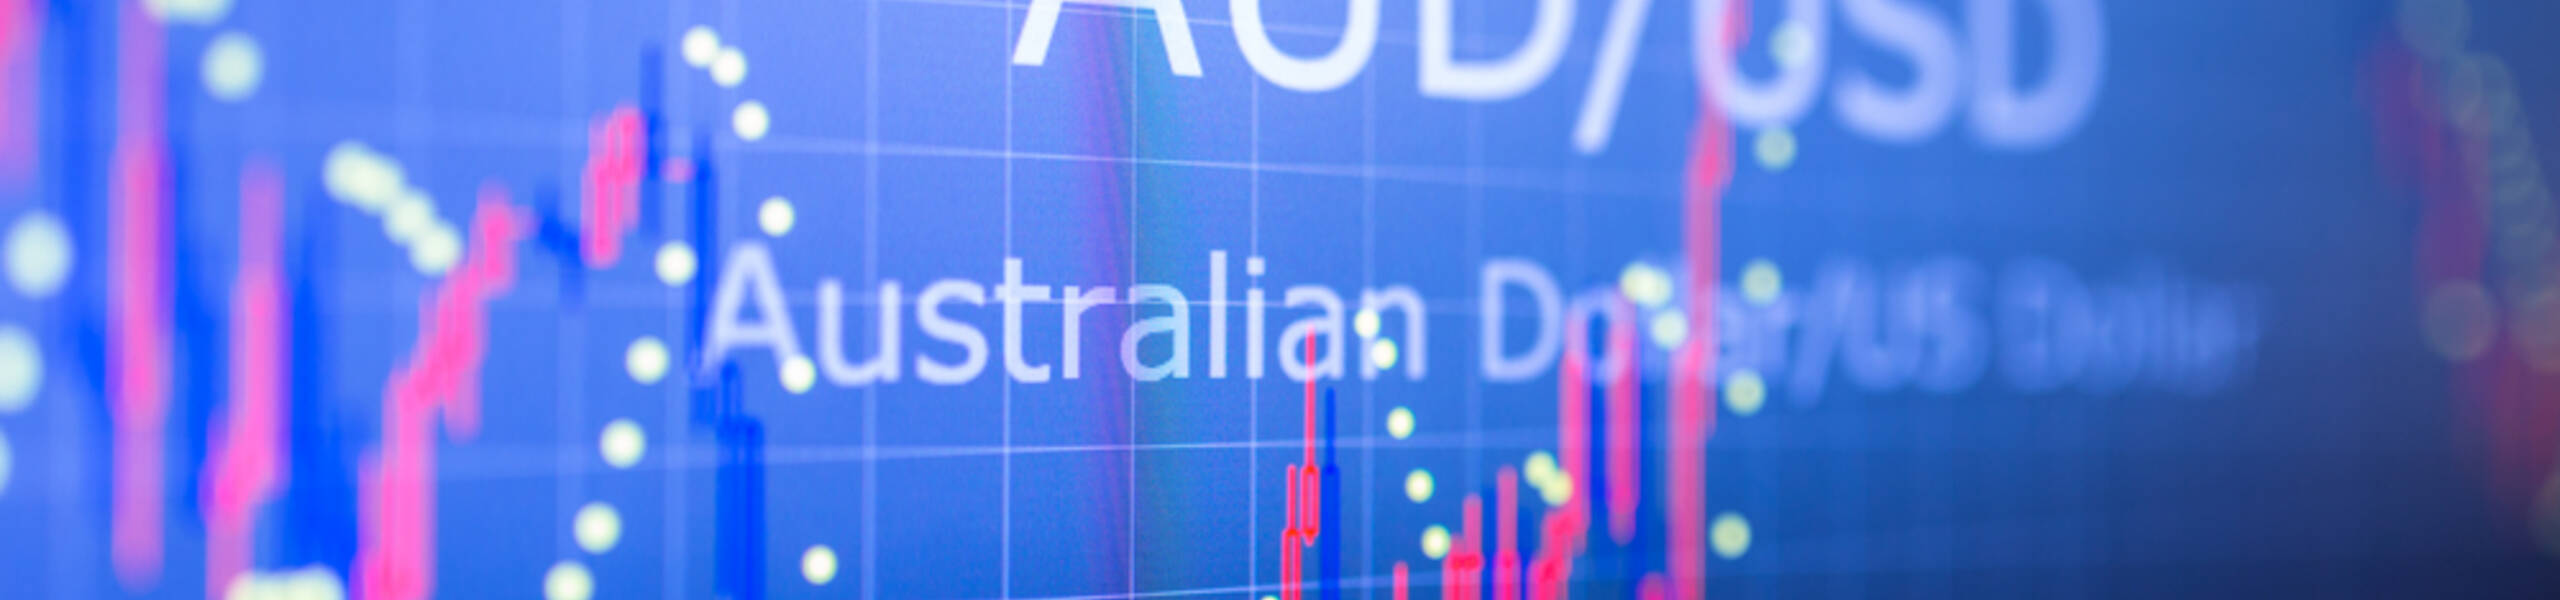 AUDUSD Terseret Data Tenaga Kerja Australia Yang buruk